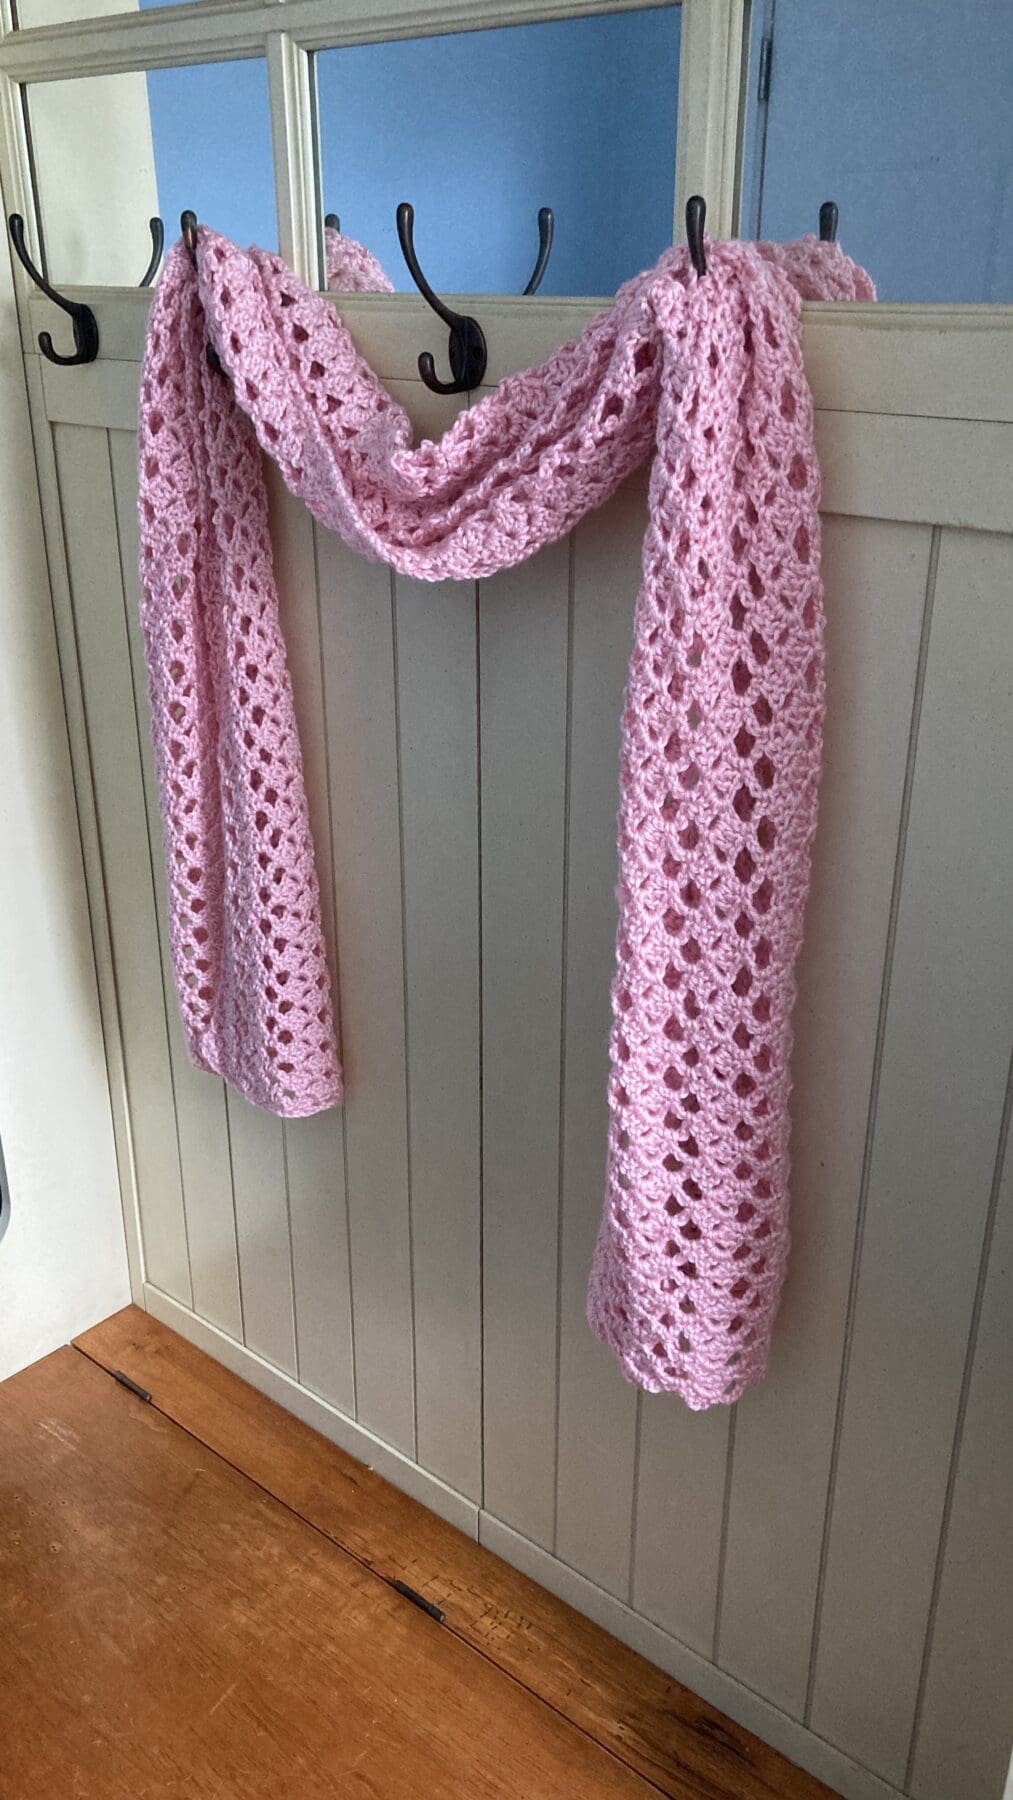 Gorgeous crochet shawl draped over hooks